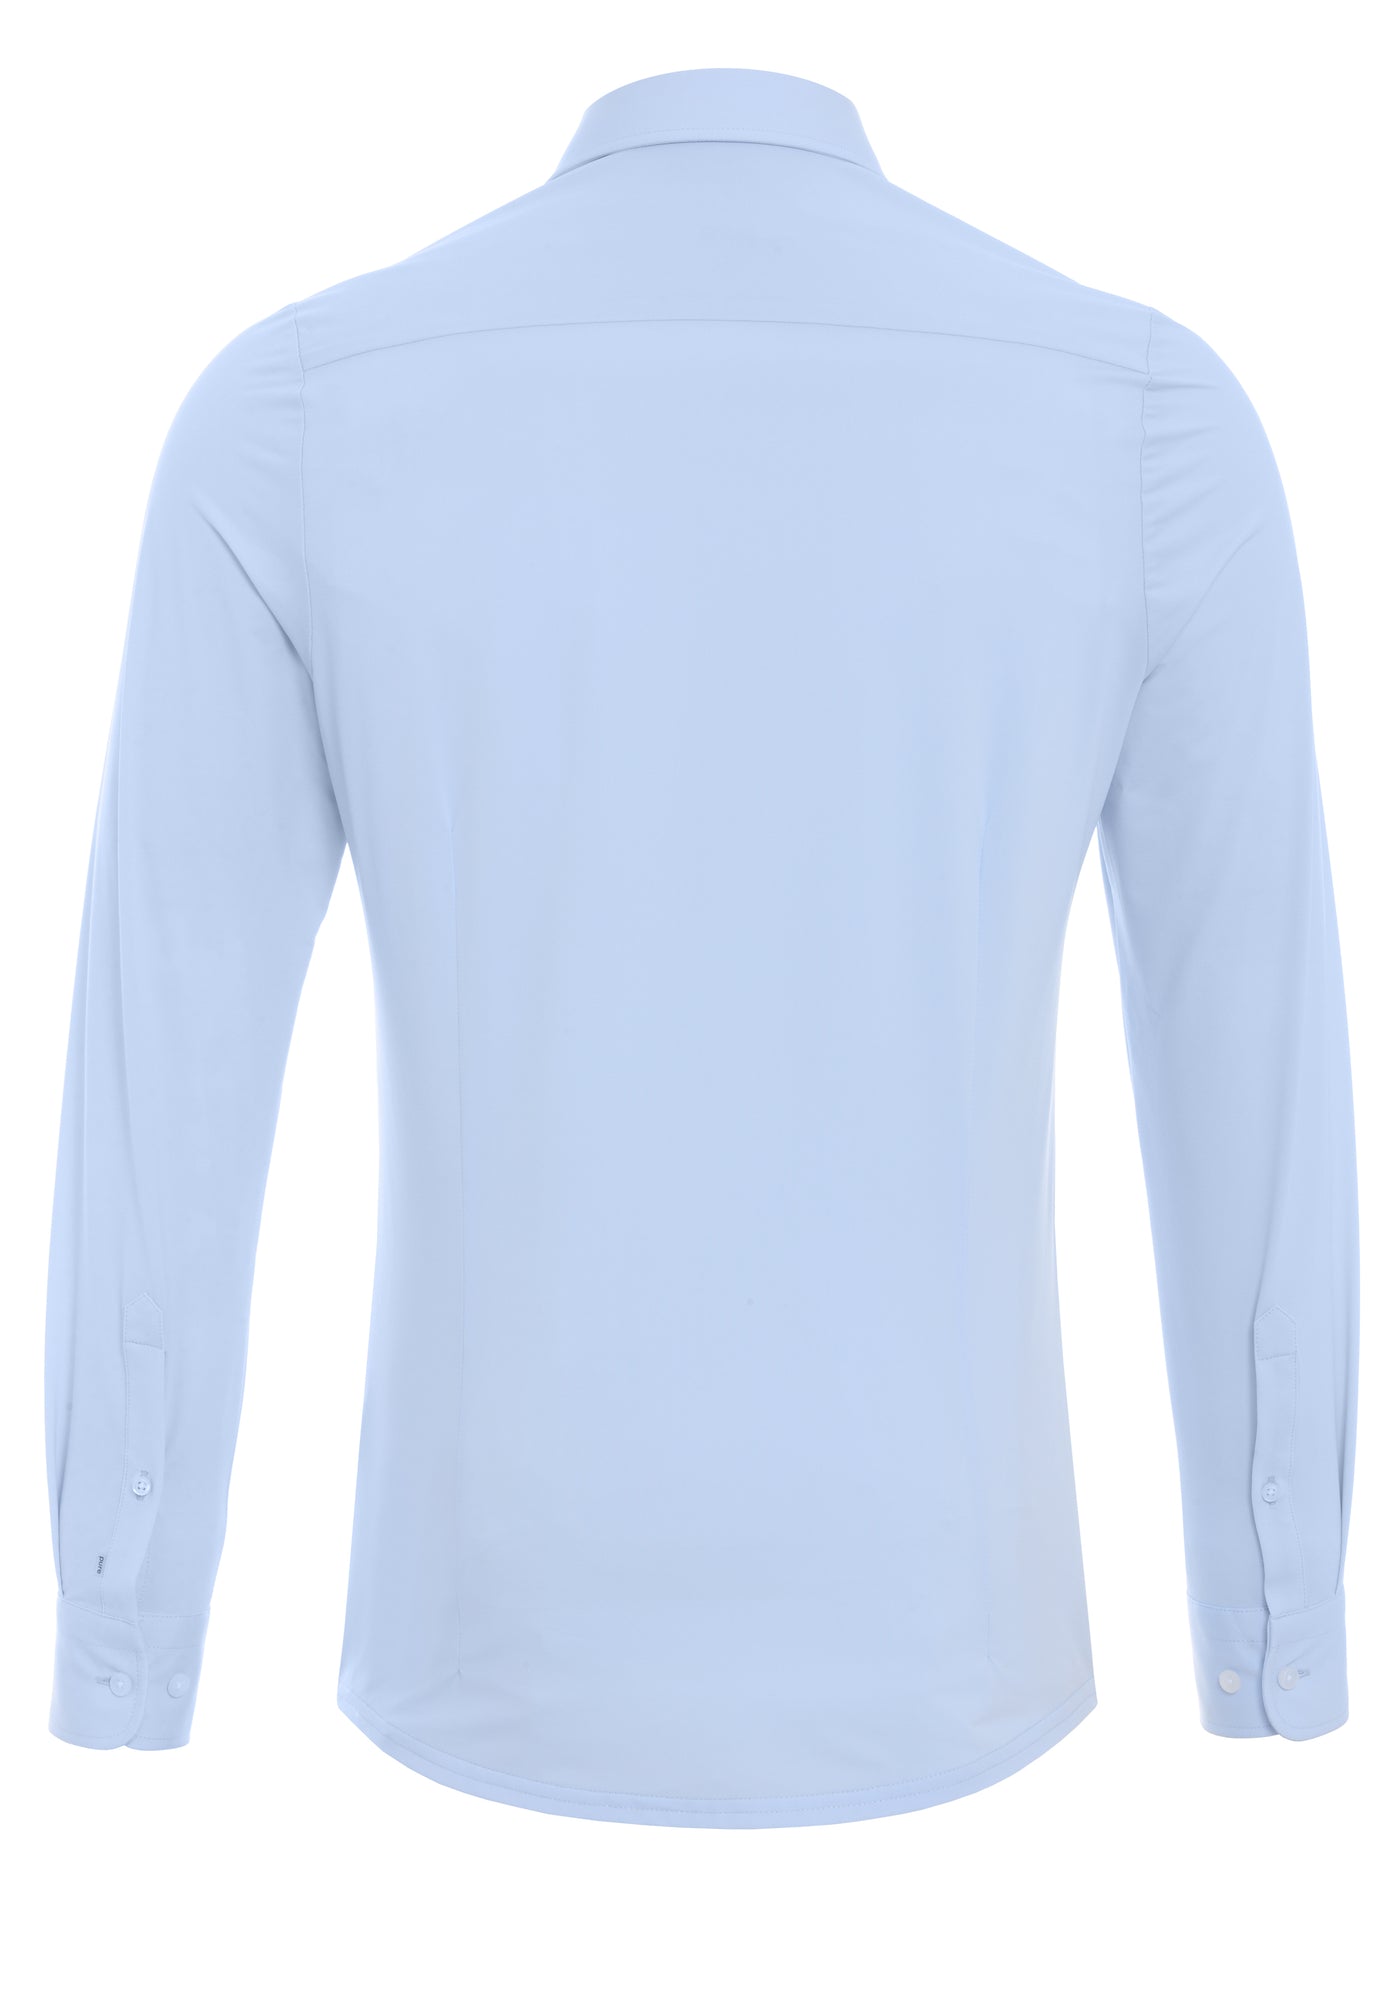 4030-21780 - Functional Shirt Extra Long Sleeve - blue